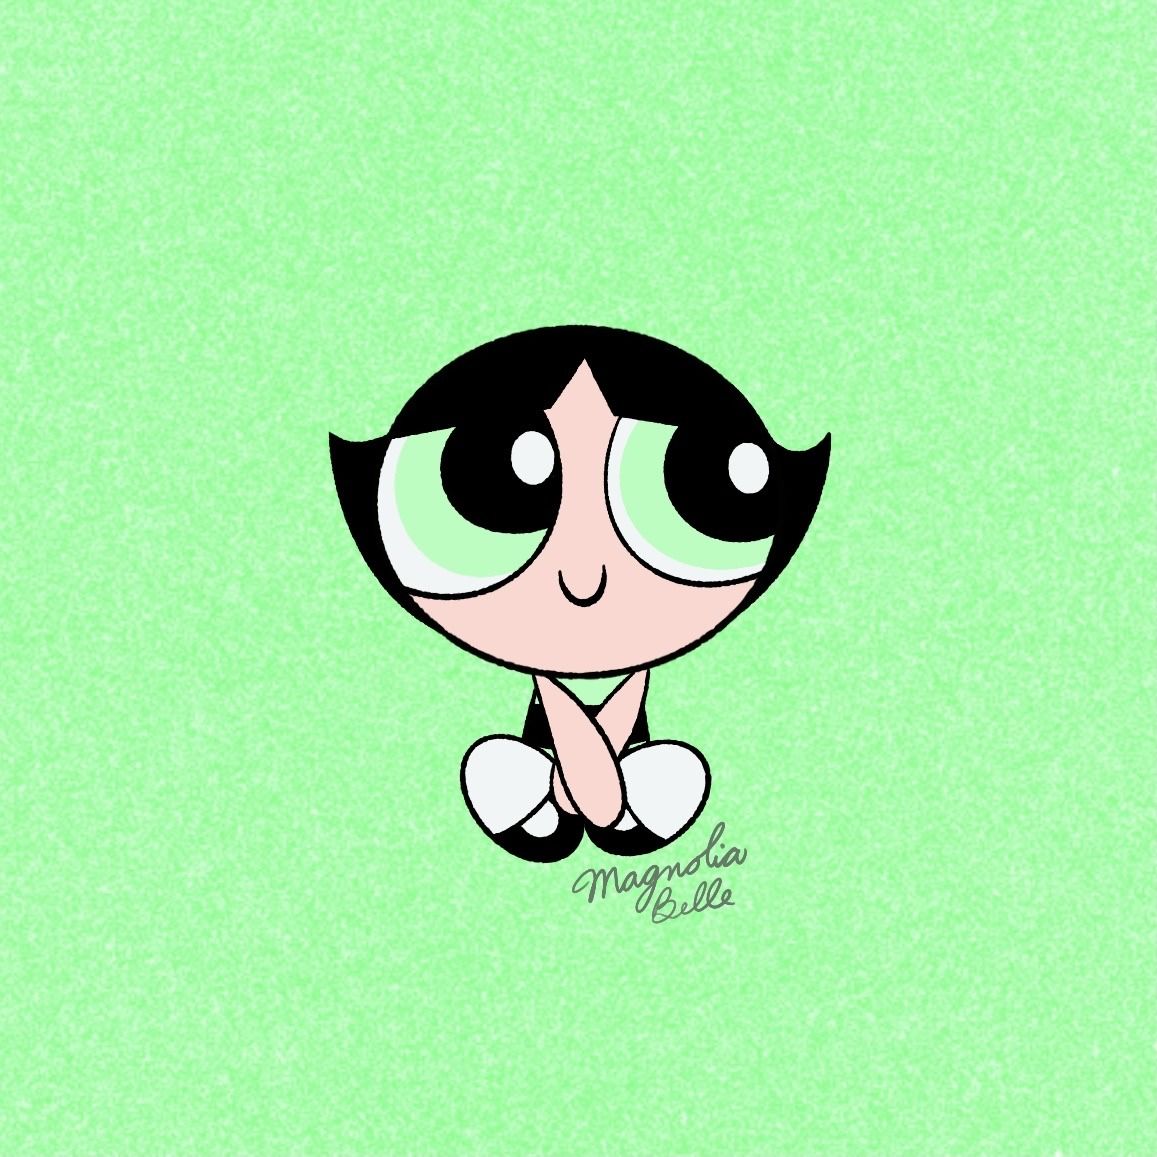 Buttercup, one of the Powerpuff Girls, sitting cross-legged on a green background - Buttercup